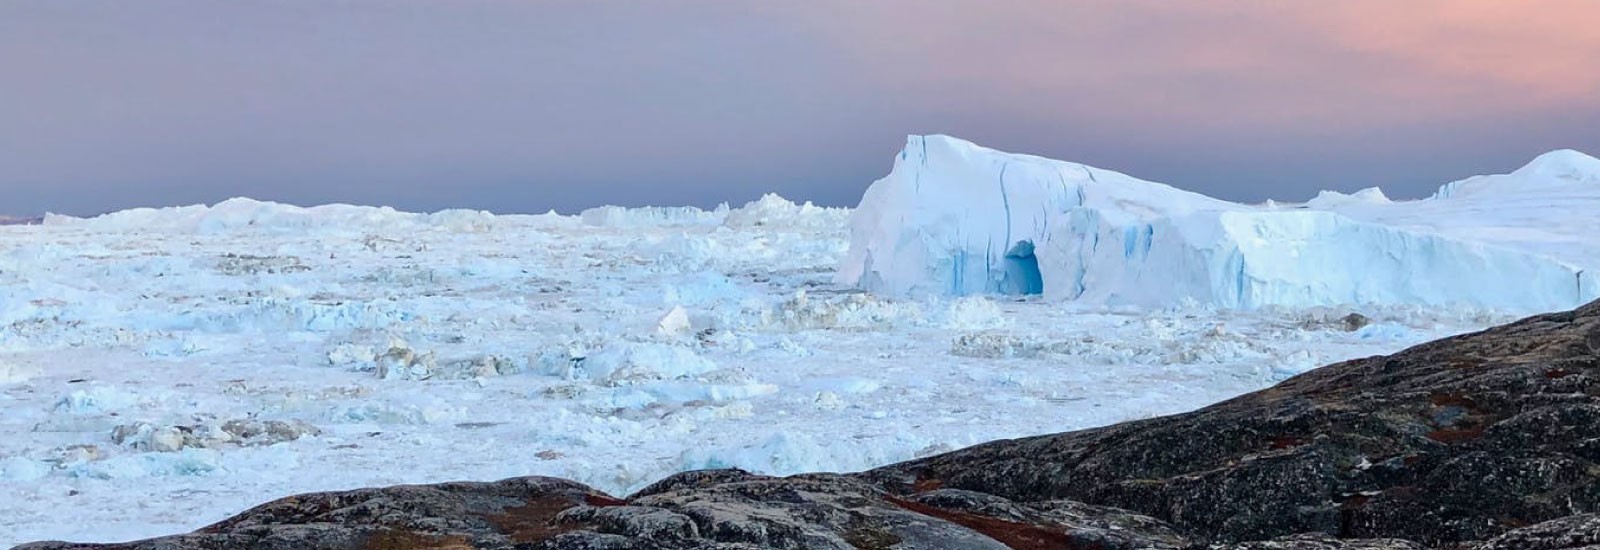 Shrinking Ice Along the Greenland Shore